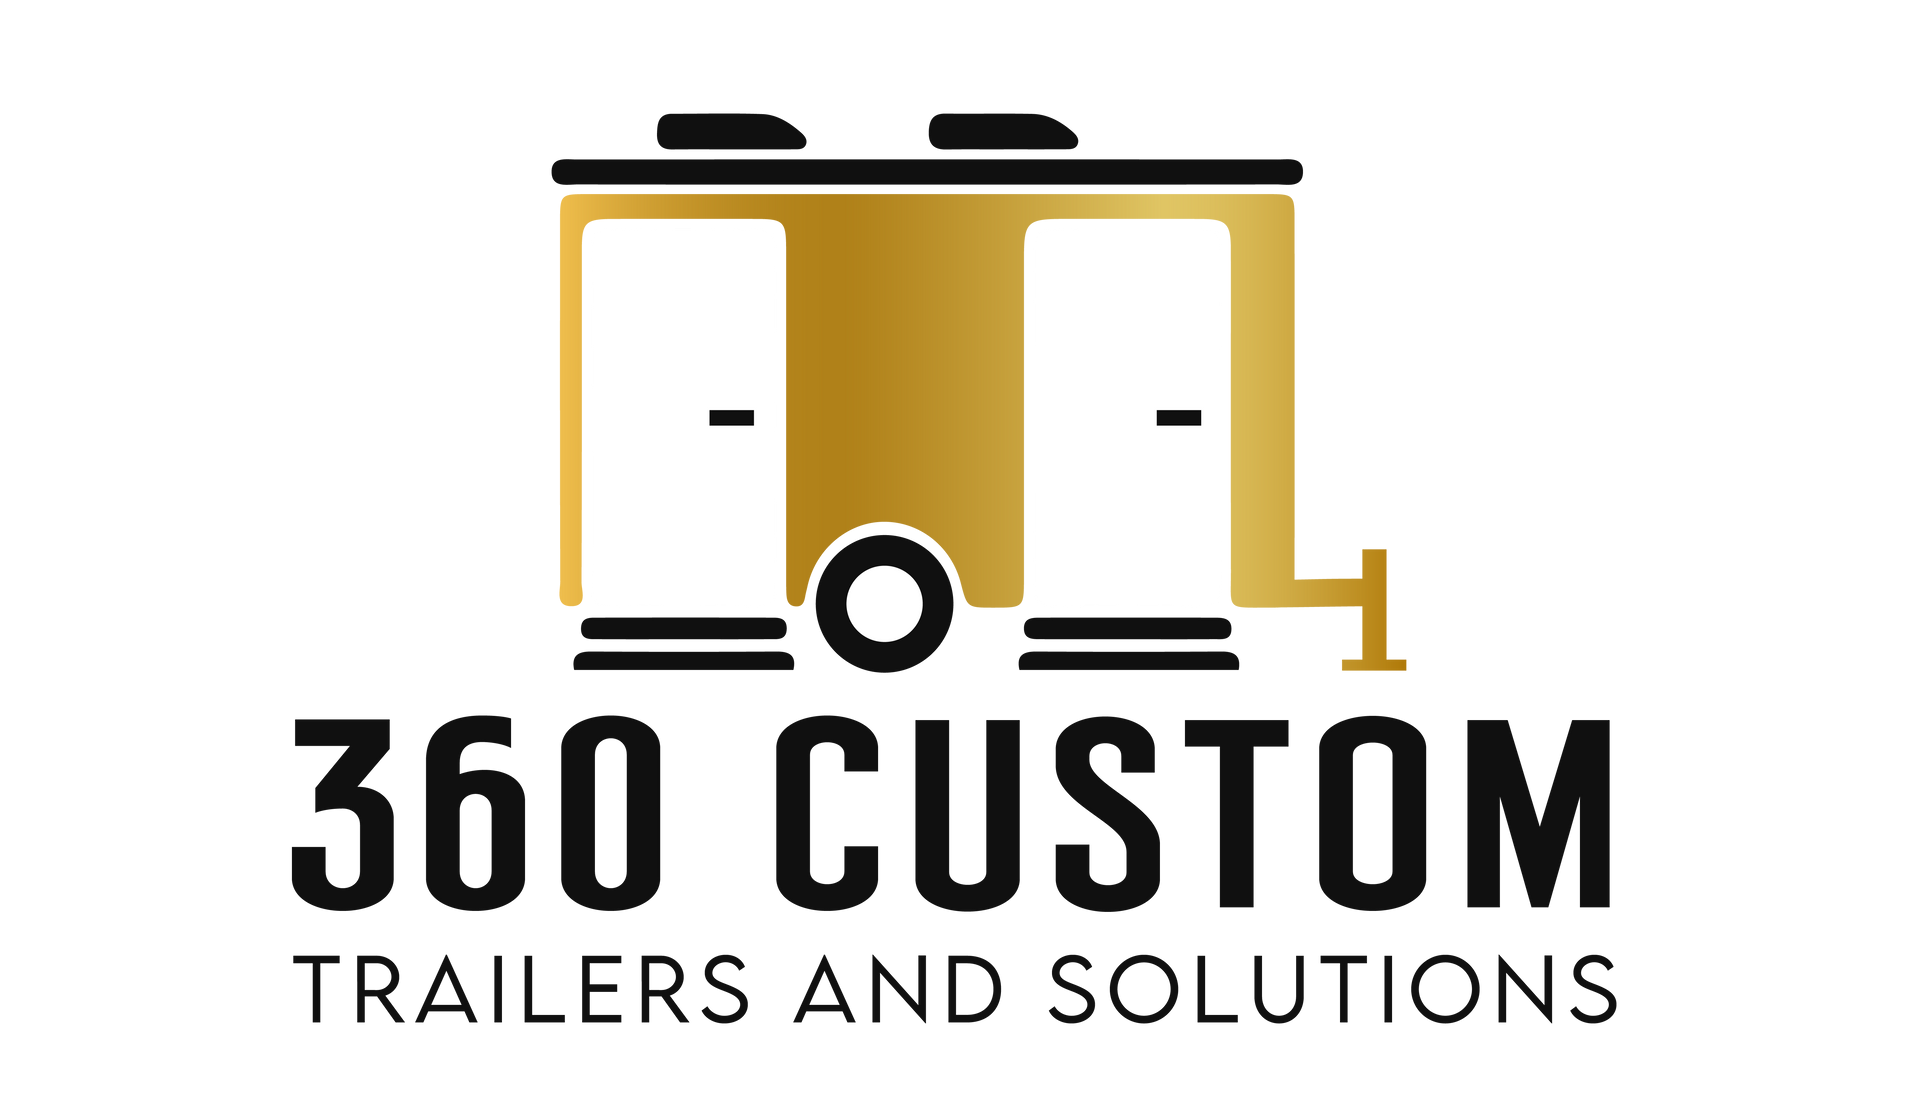 360 Custom Trailers & Solutions LLC